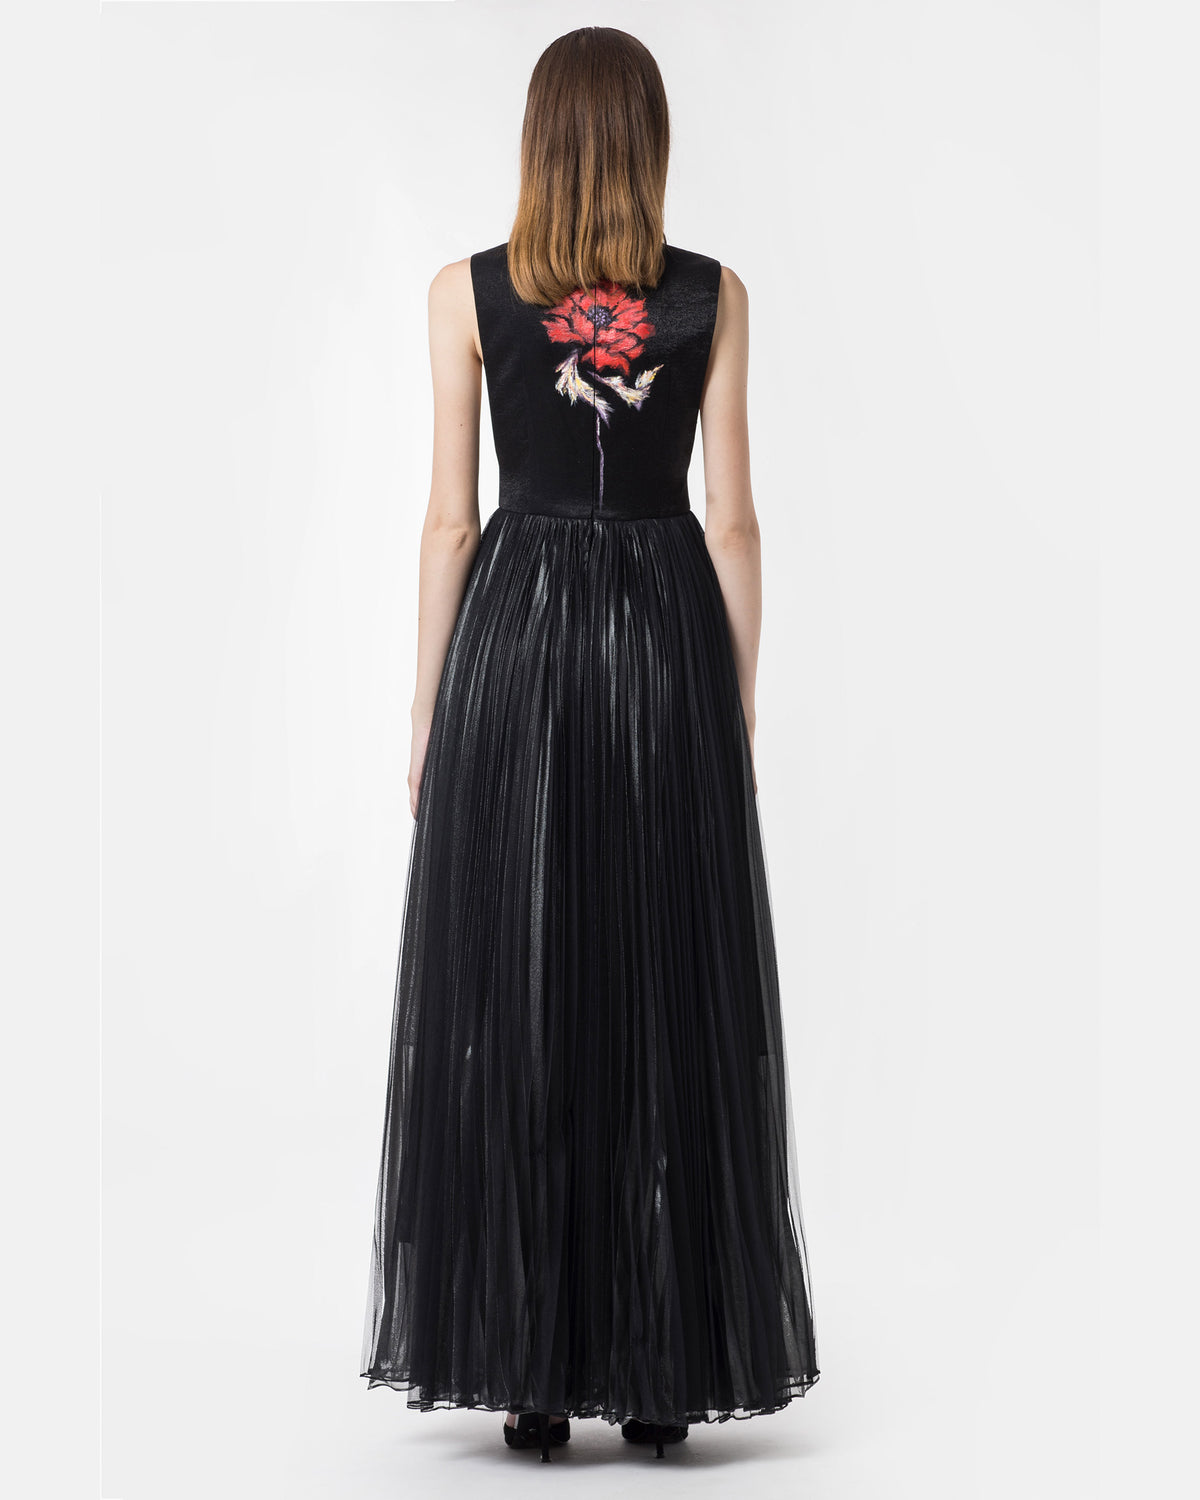 Poppy-painted Sleeveless Black  Gown Dress